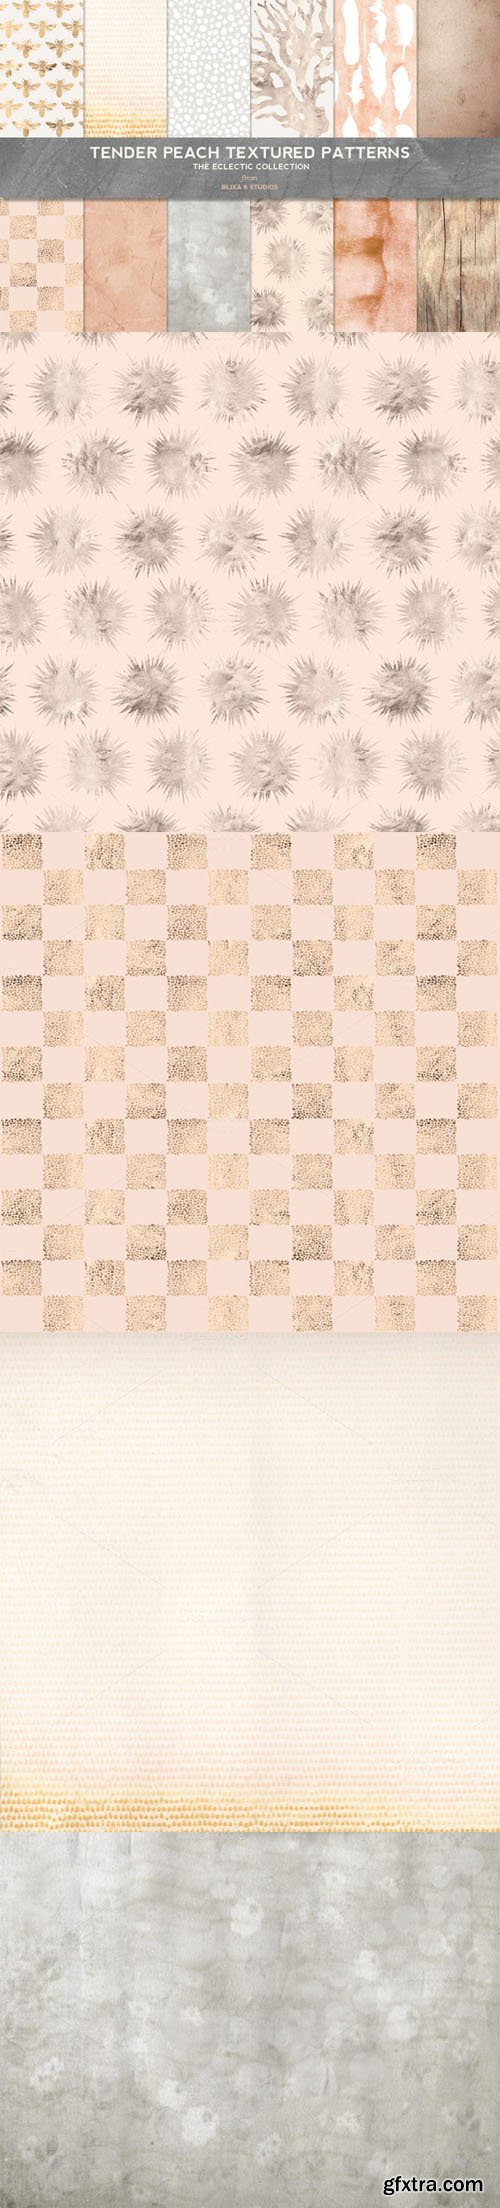 Tender Peach & Gold Texture Patterns - CM 311564